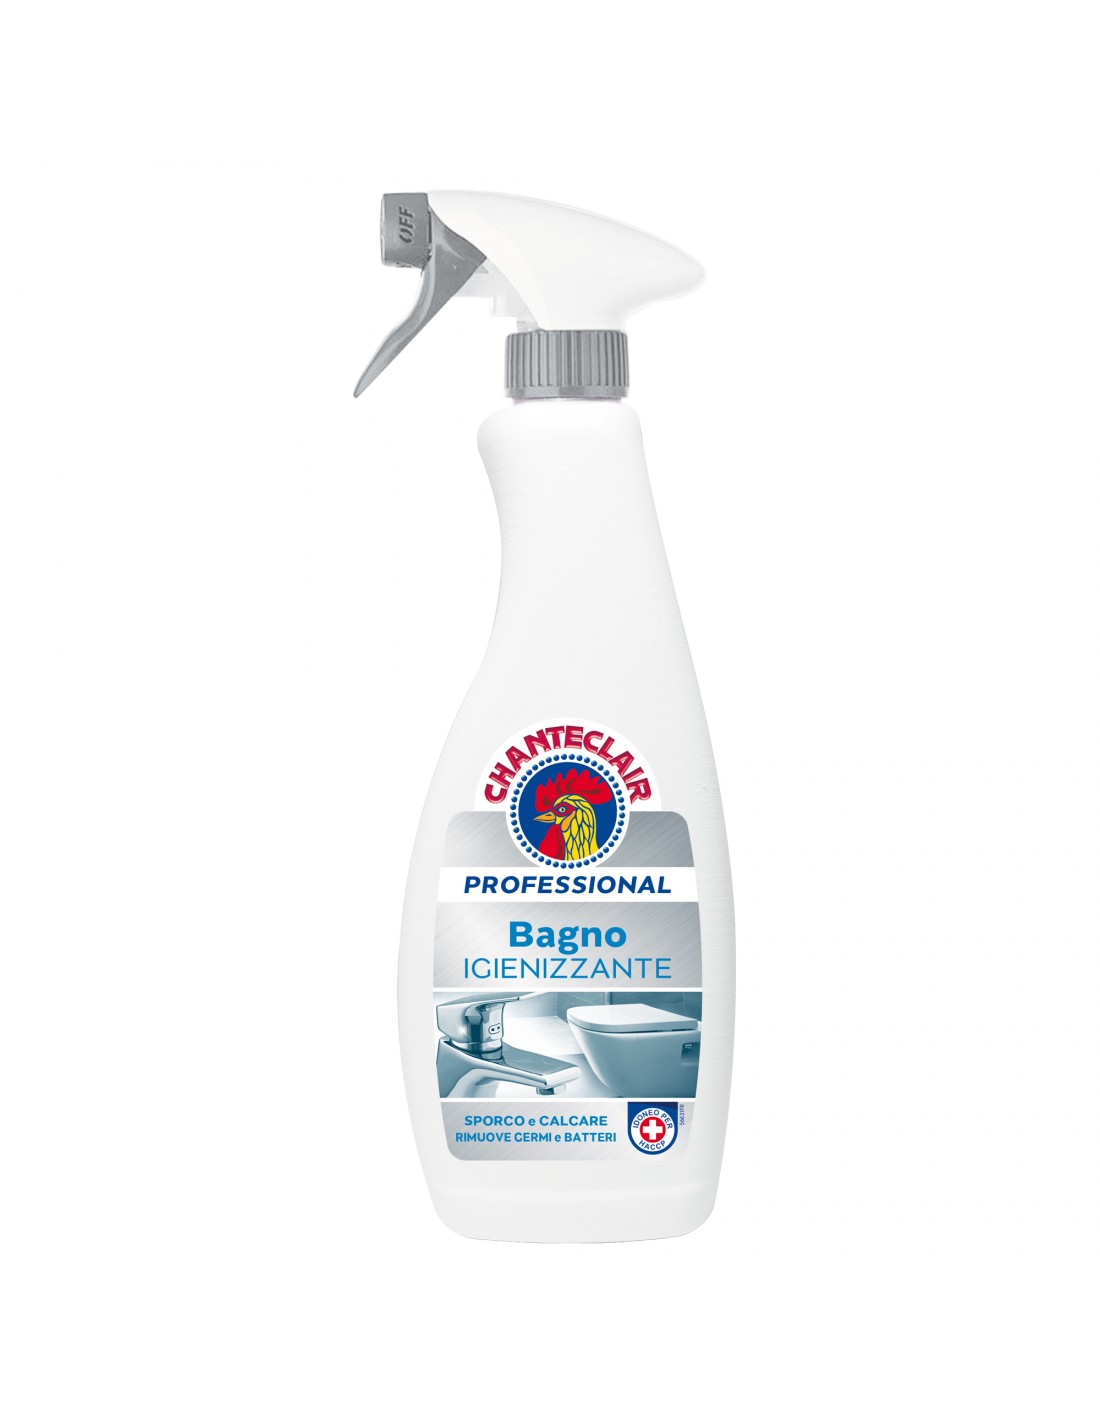 Chanteclair Detergente Bagno Igienizzante Professional - spray da 700 ml -  603420IT